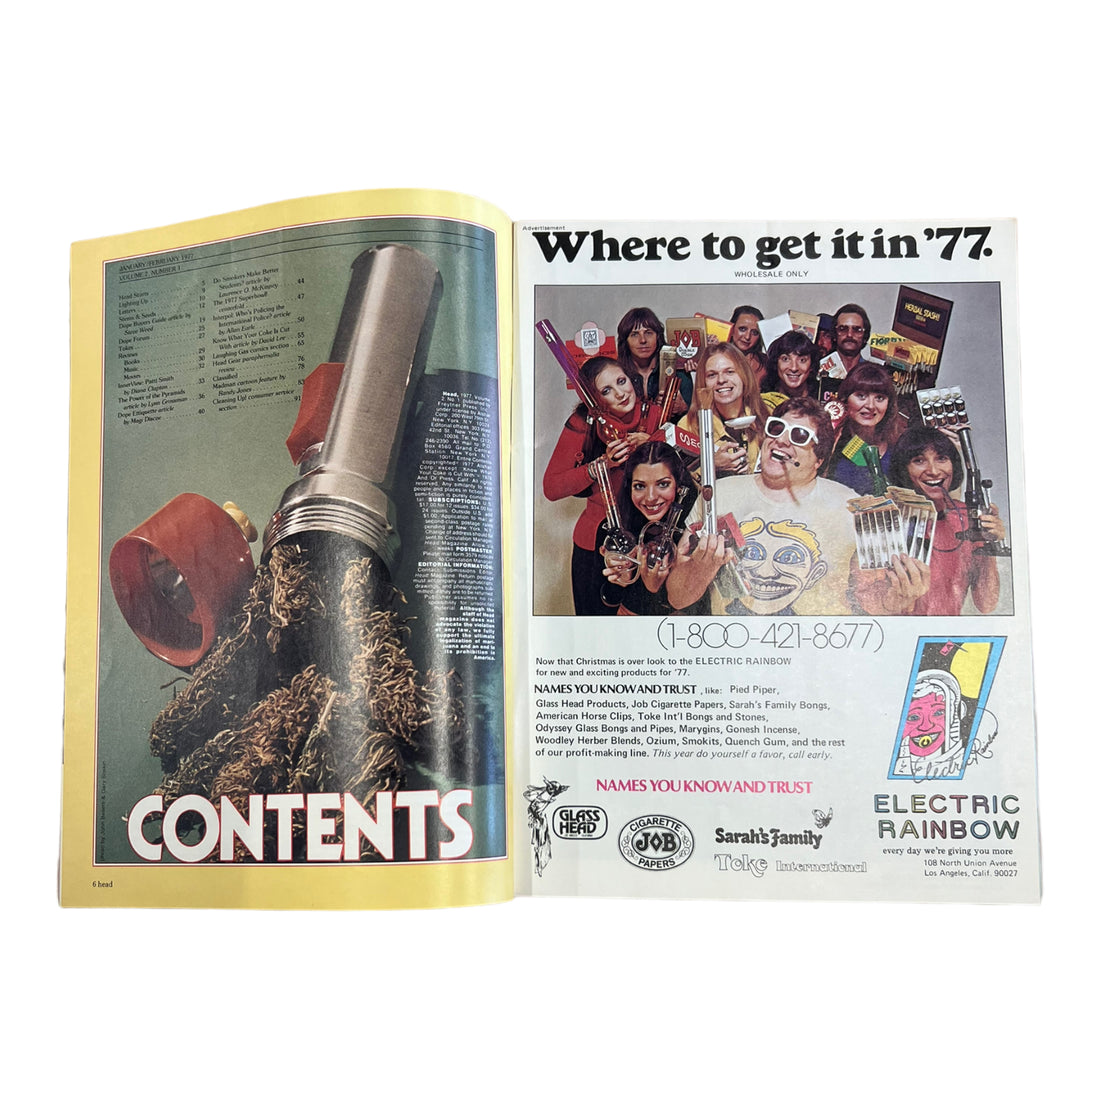 1977 ‘HEAD’ MAGAZINE SUPERBOWL CENTERFOLD JAN./FEB. EDITION VOL. 2 NO. 1 - 1970S